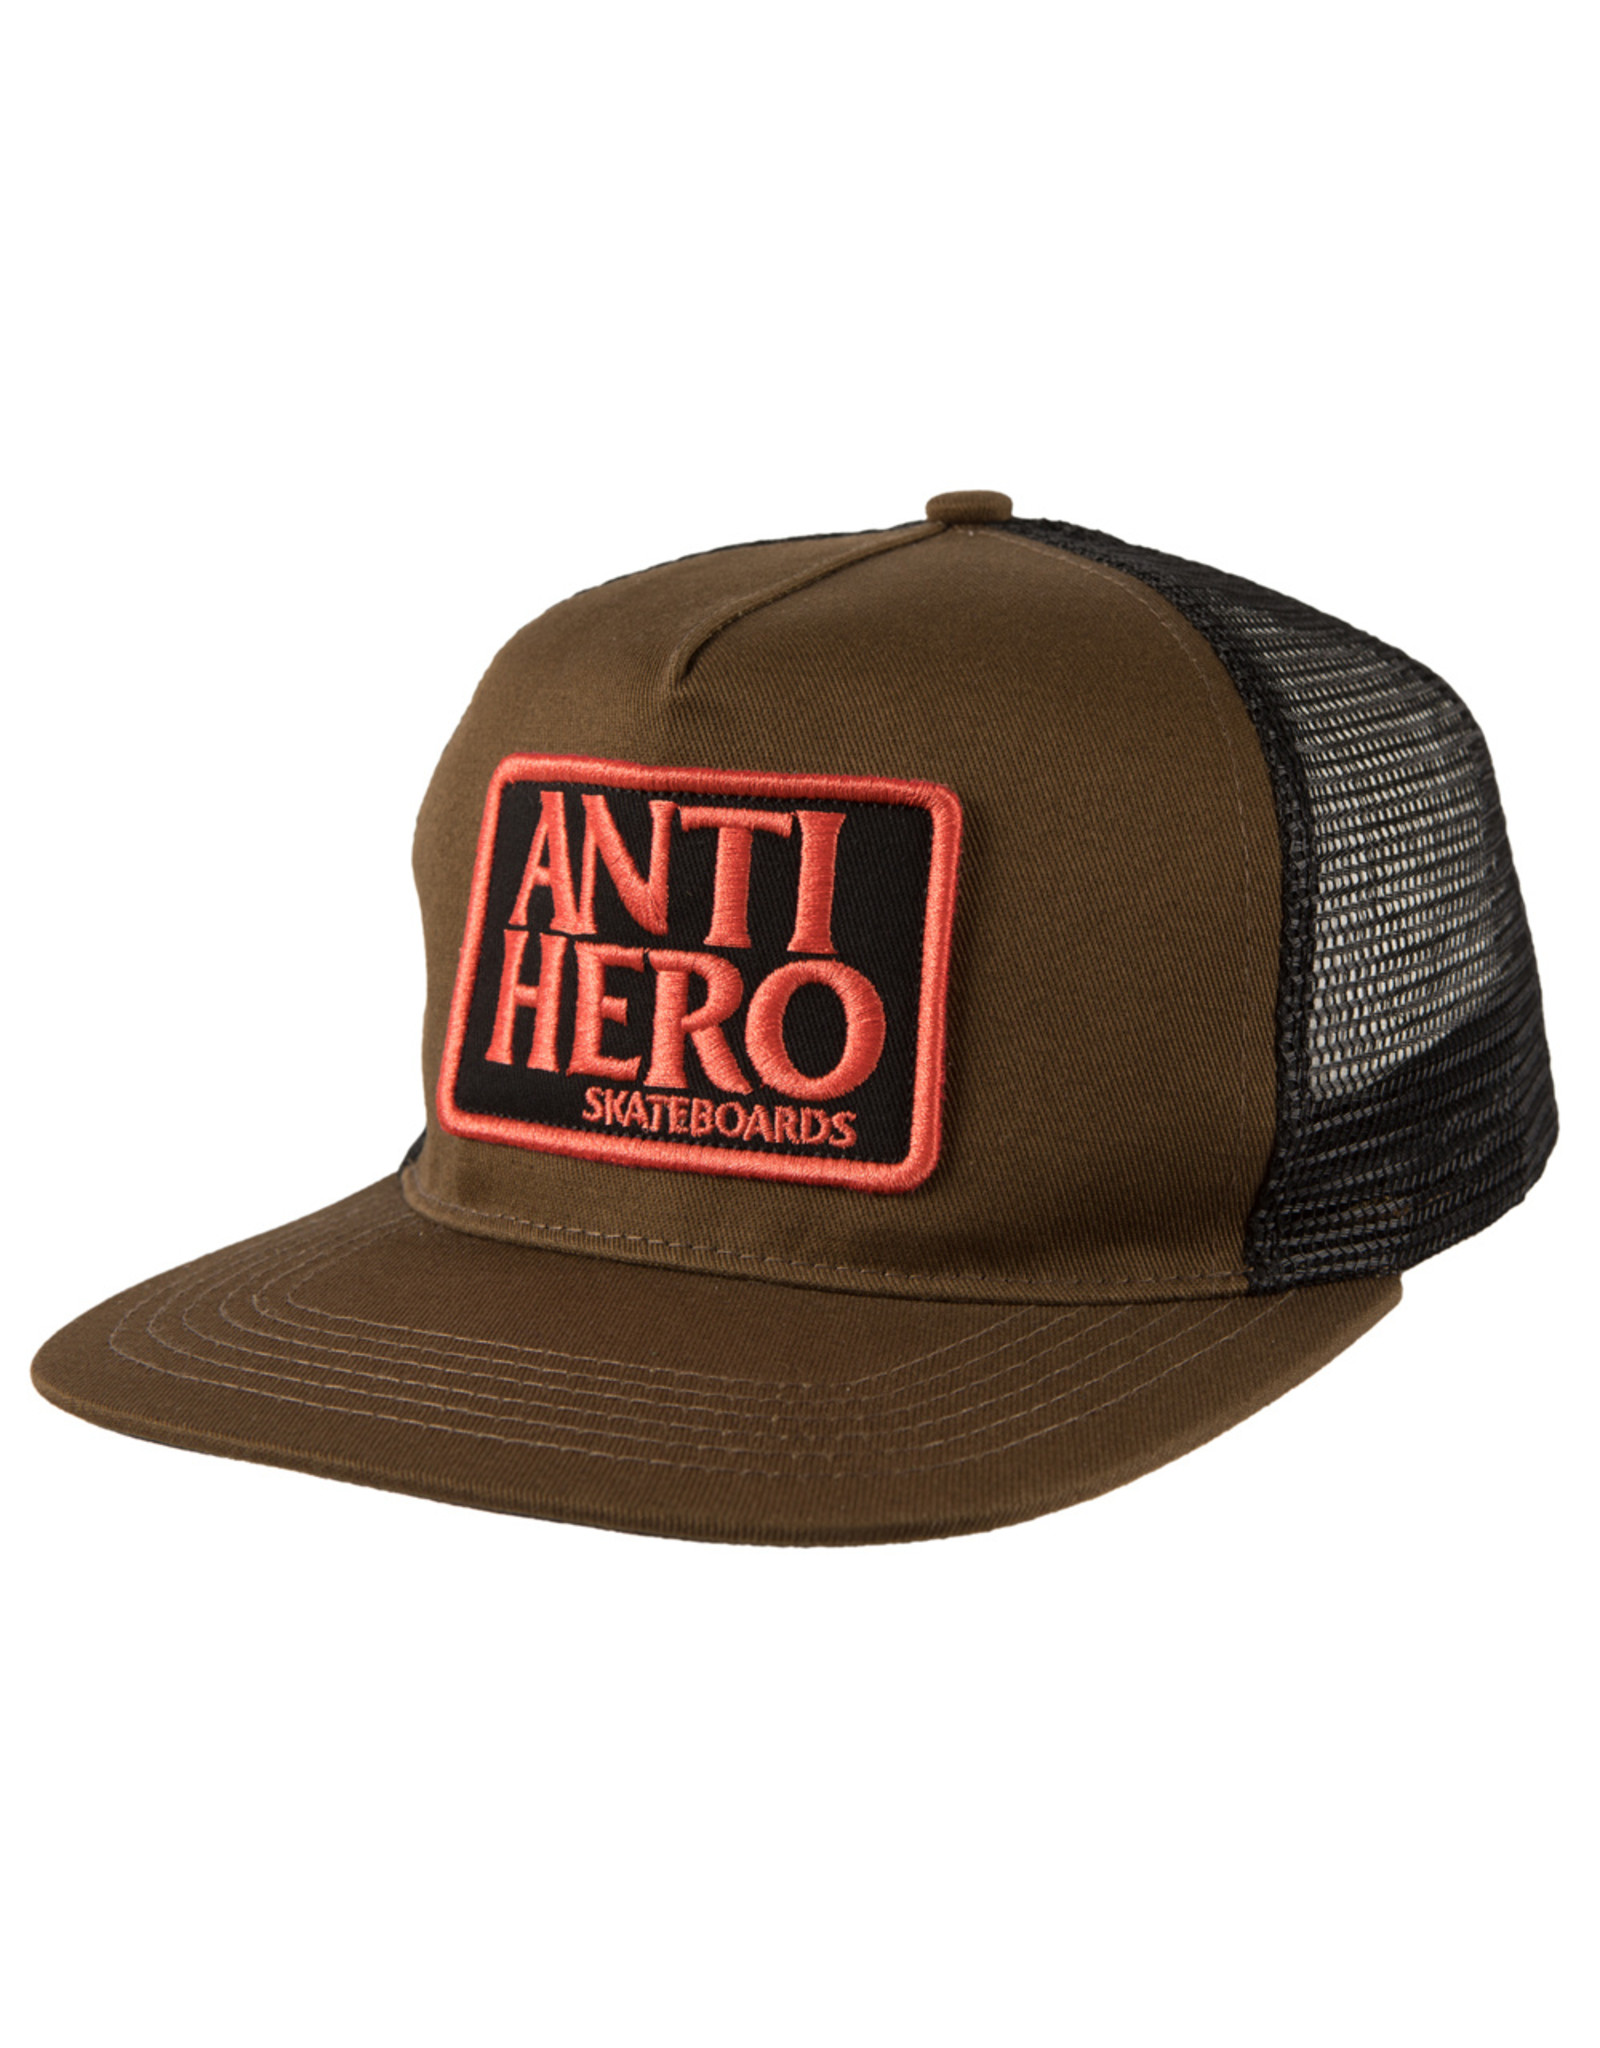 ANTIHERO SKATEBOARD DECKS ANTIHERO - RESERVE PATCH HAT OLIVE/BLACK